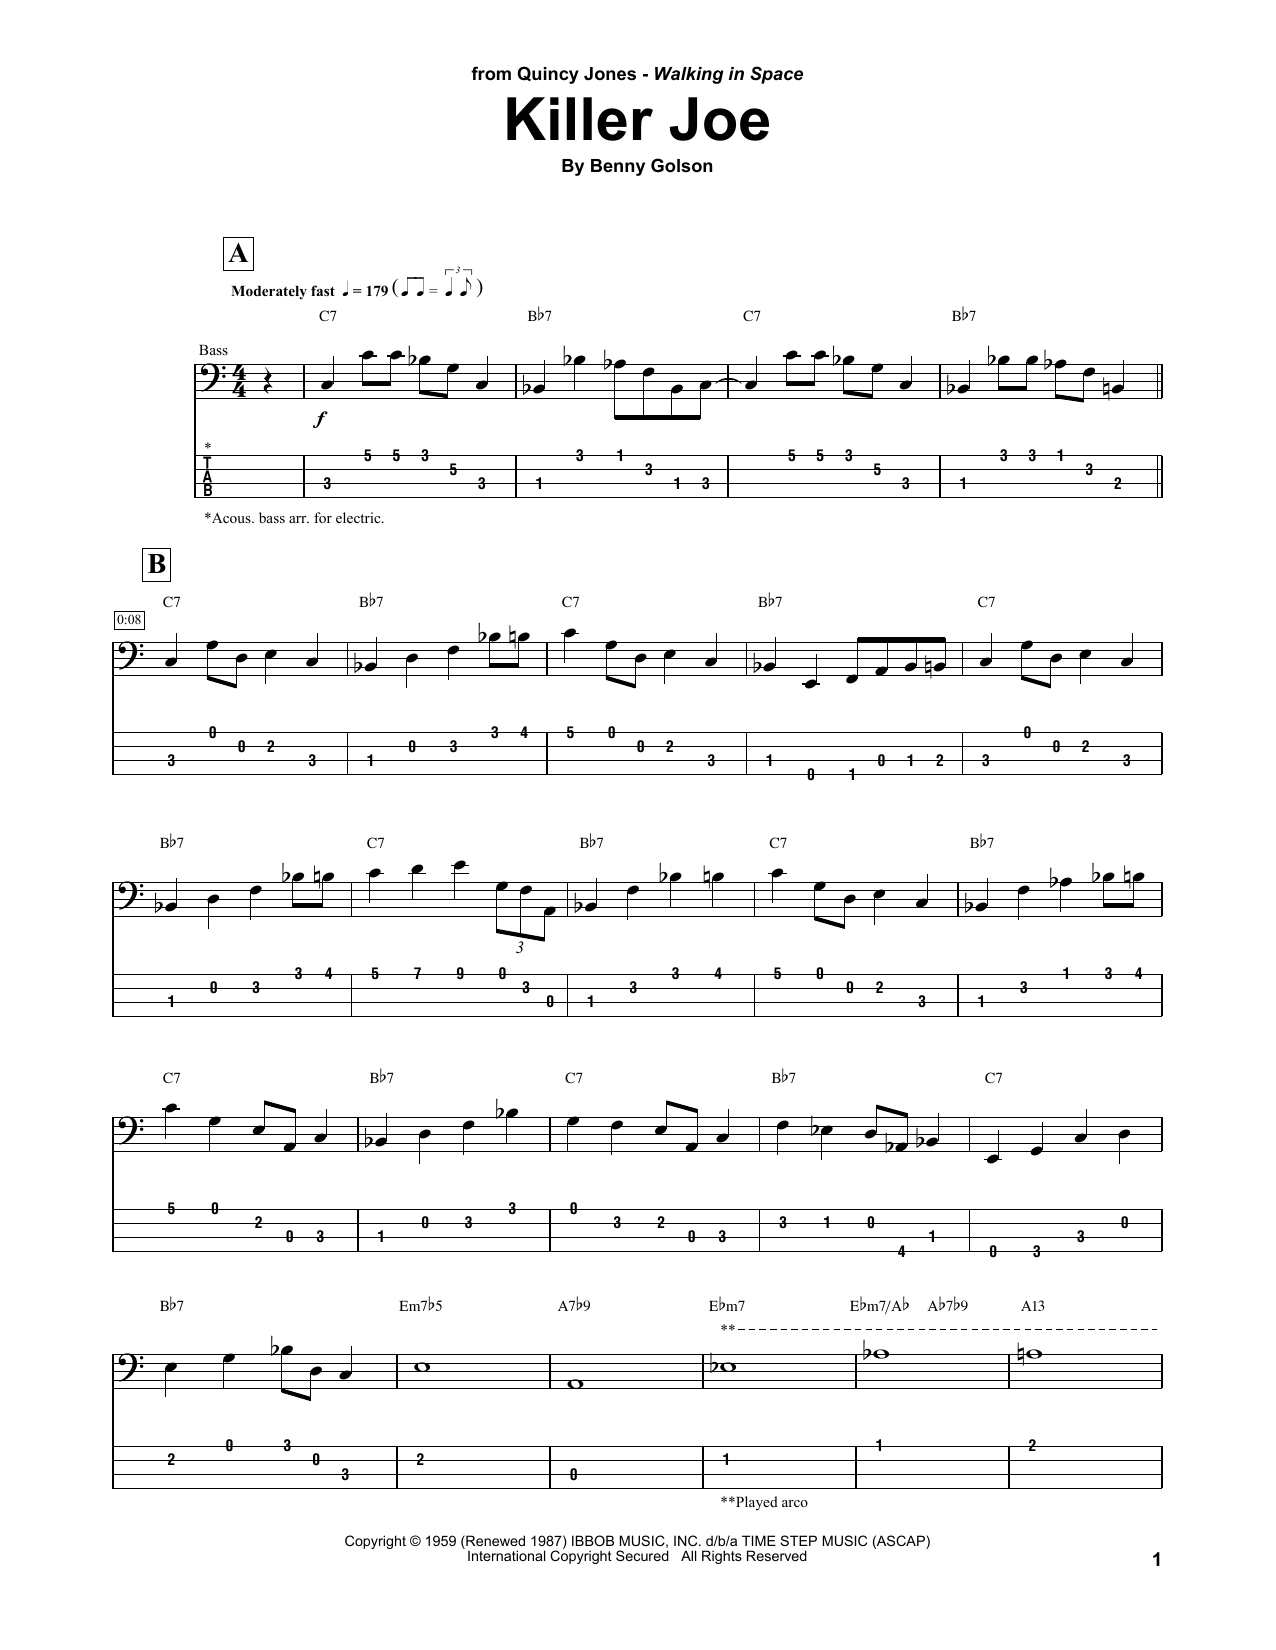 Quincy Jones Killer Joe Sheet Music Notes & Chords for Bass Guitar Tab - Download or Print PDF